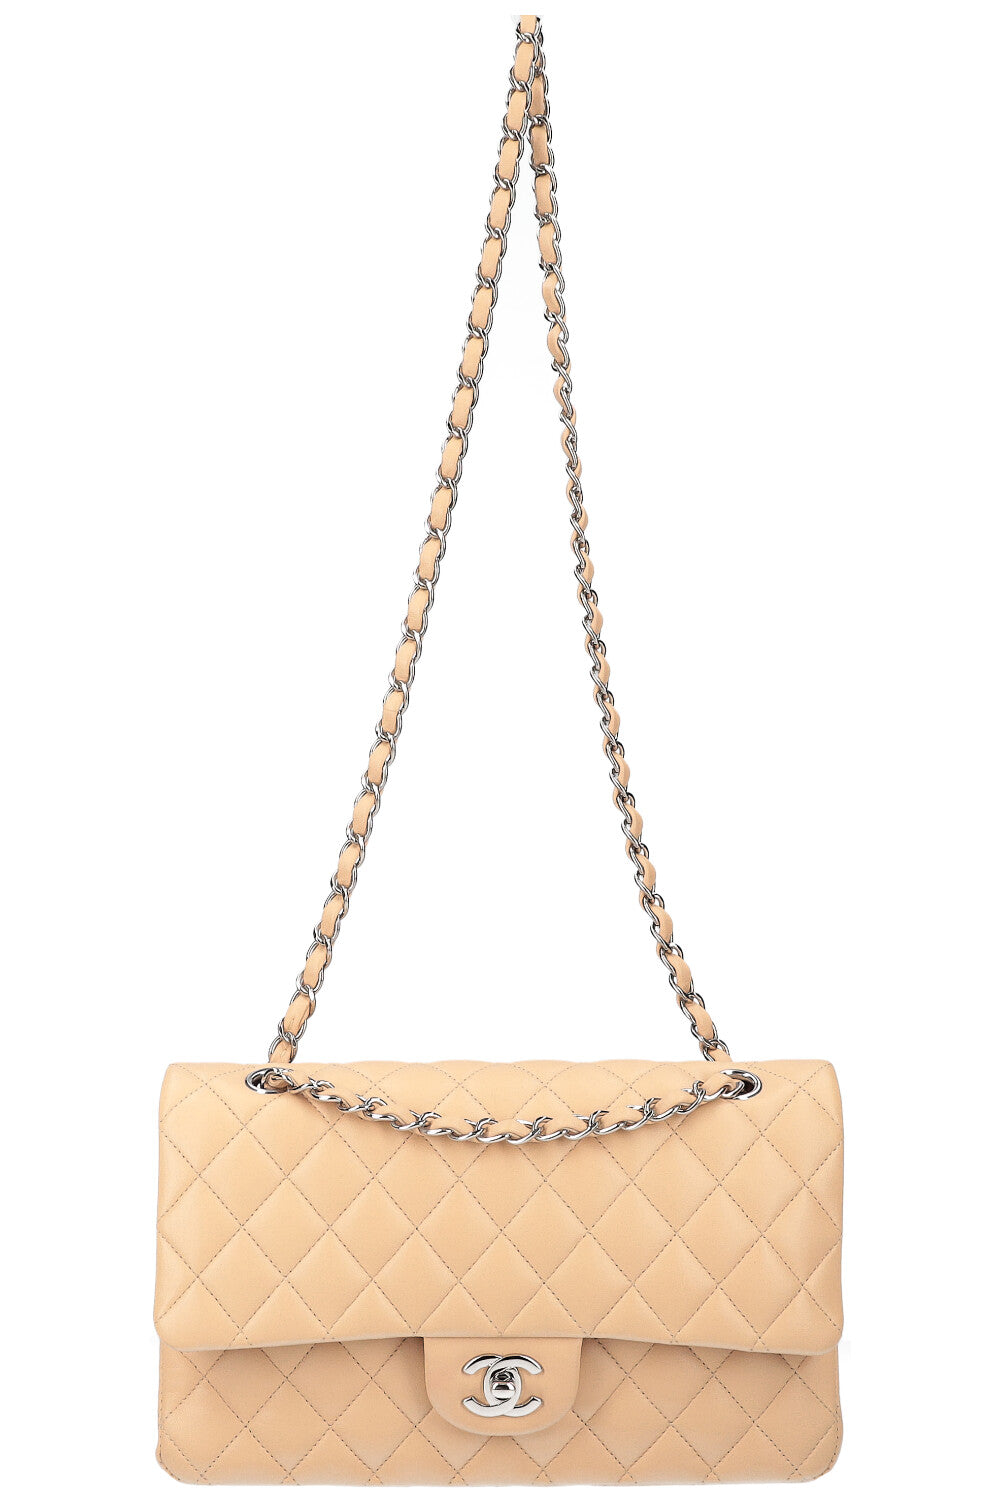 Chanel Double Flap Bag Medium Beige 2019